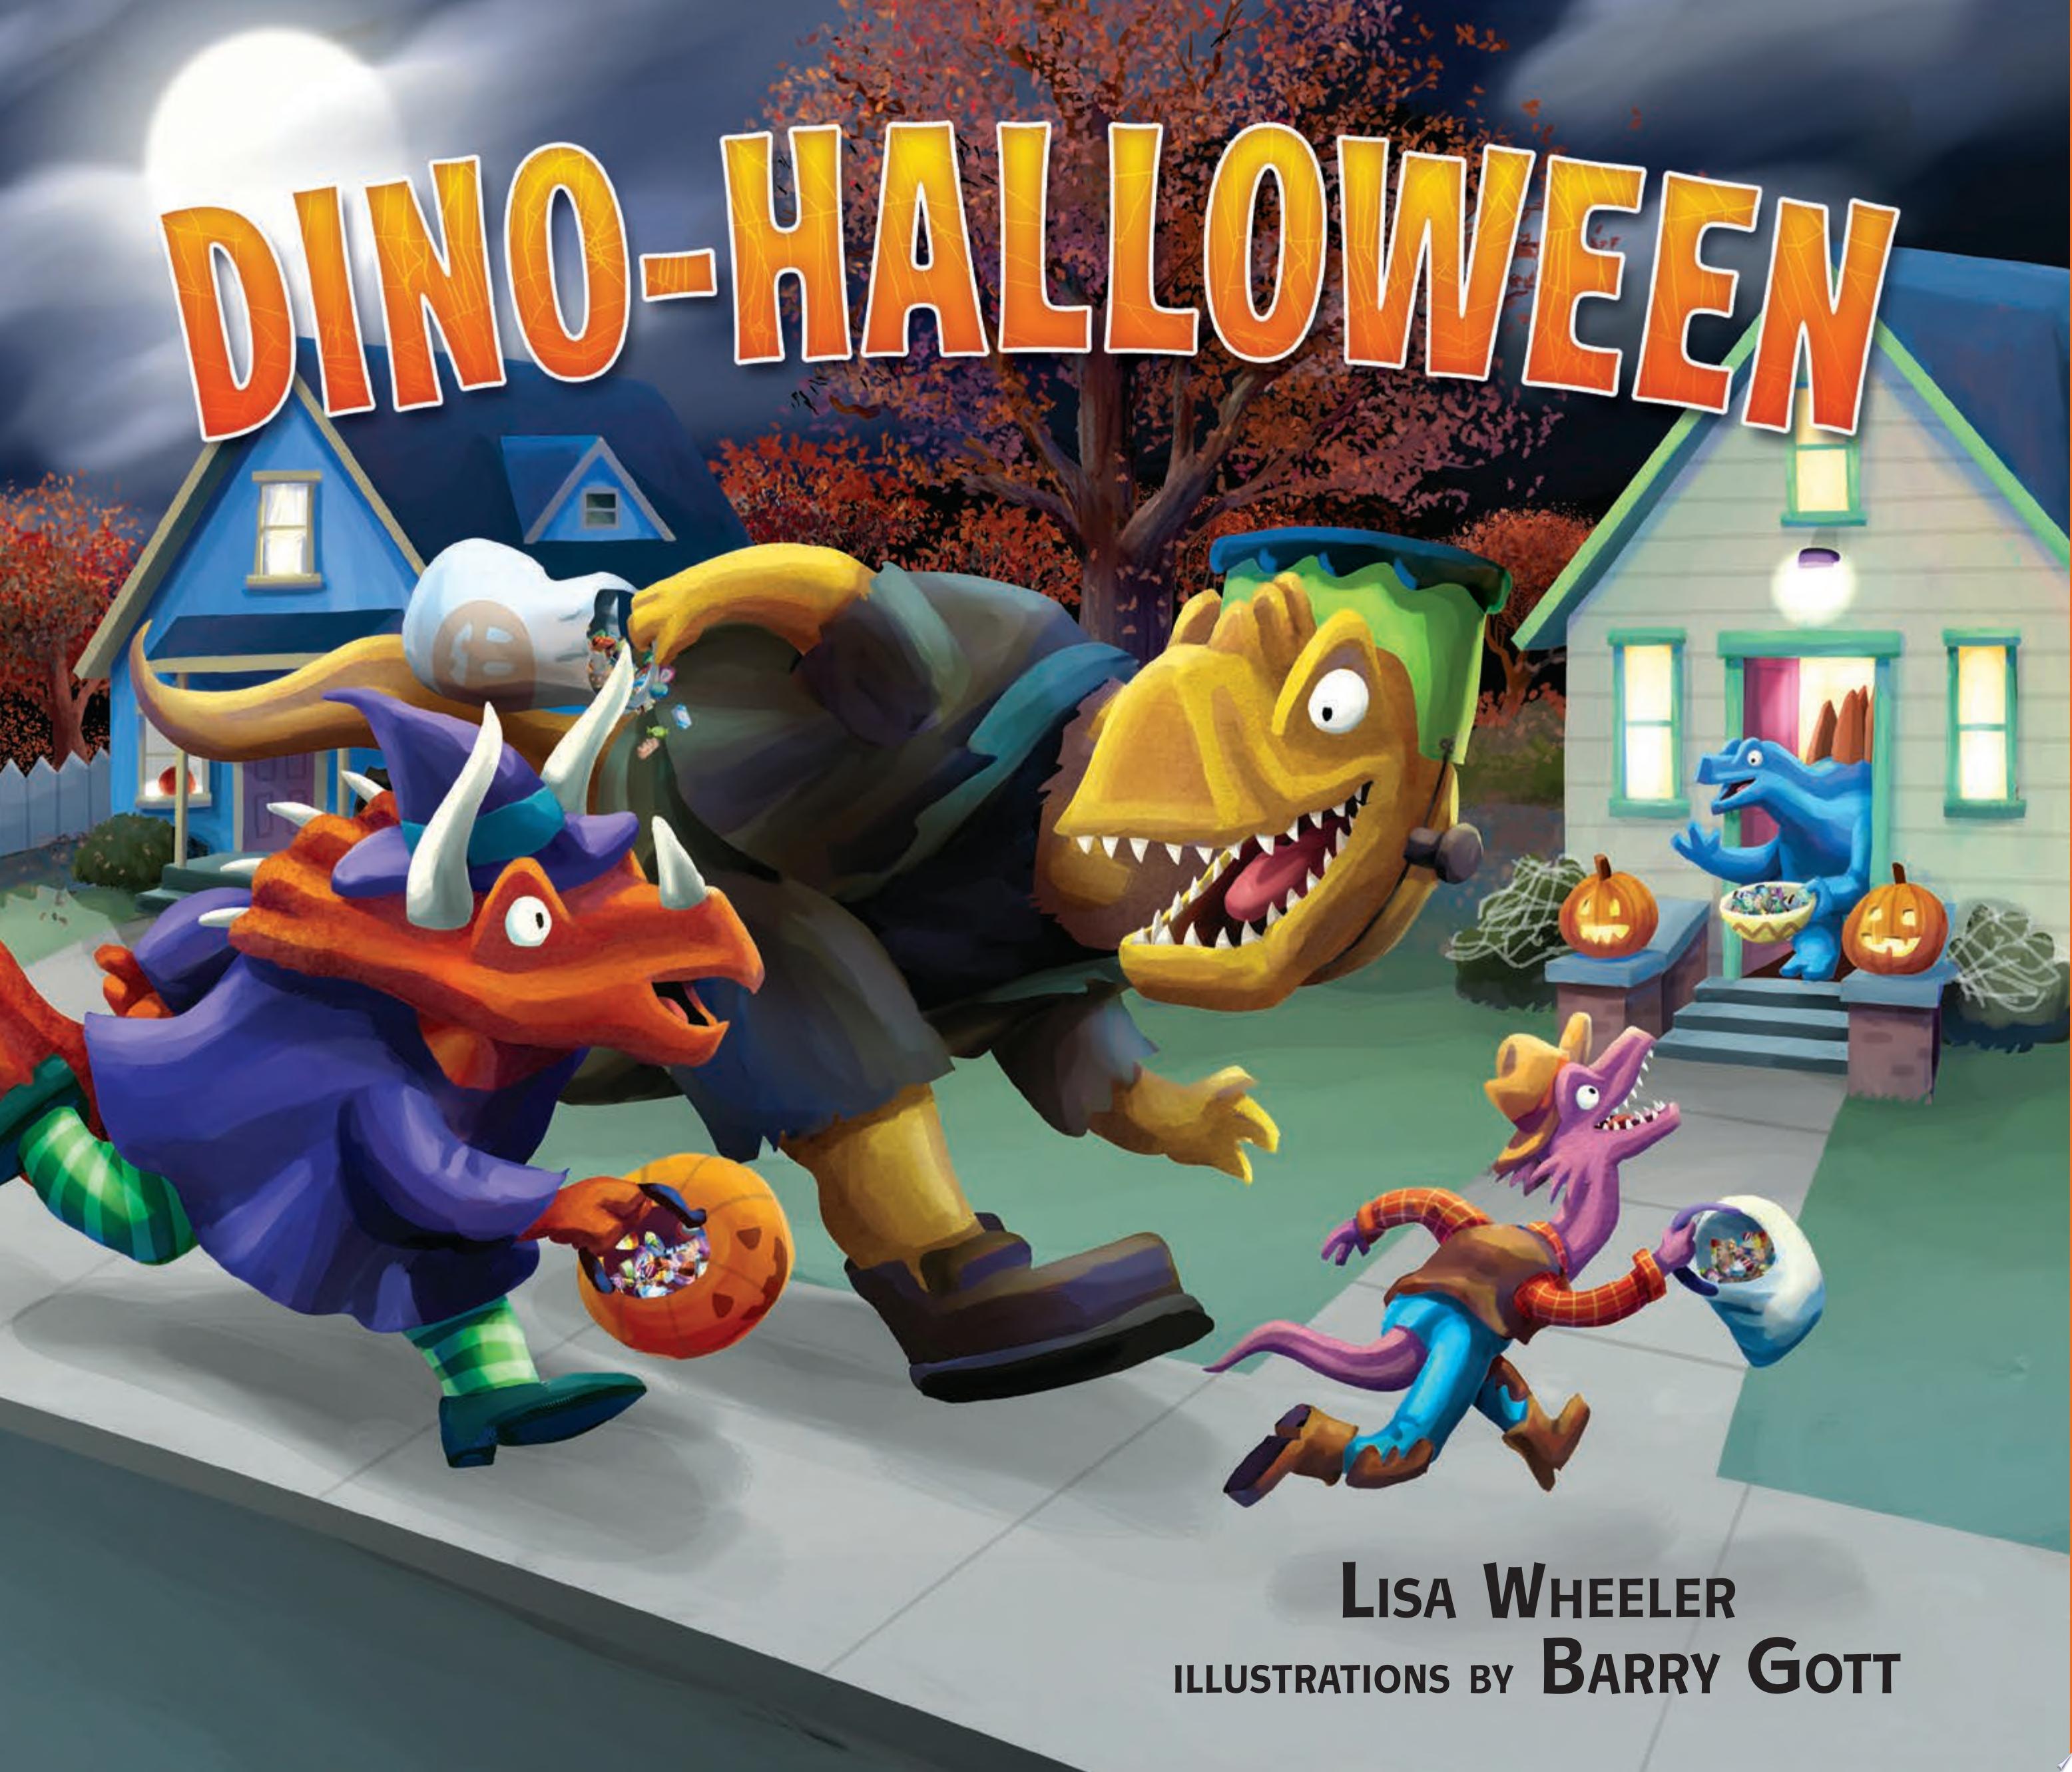 Image for "Dino-Halloween"